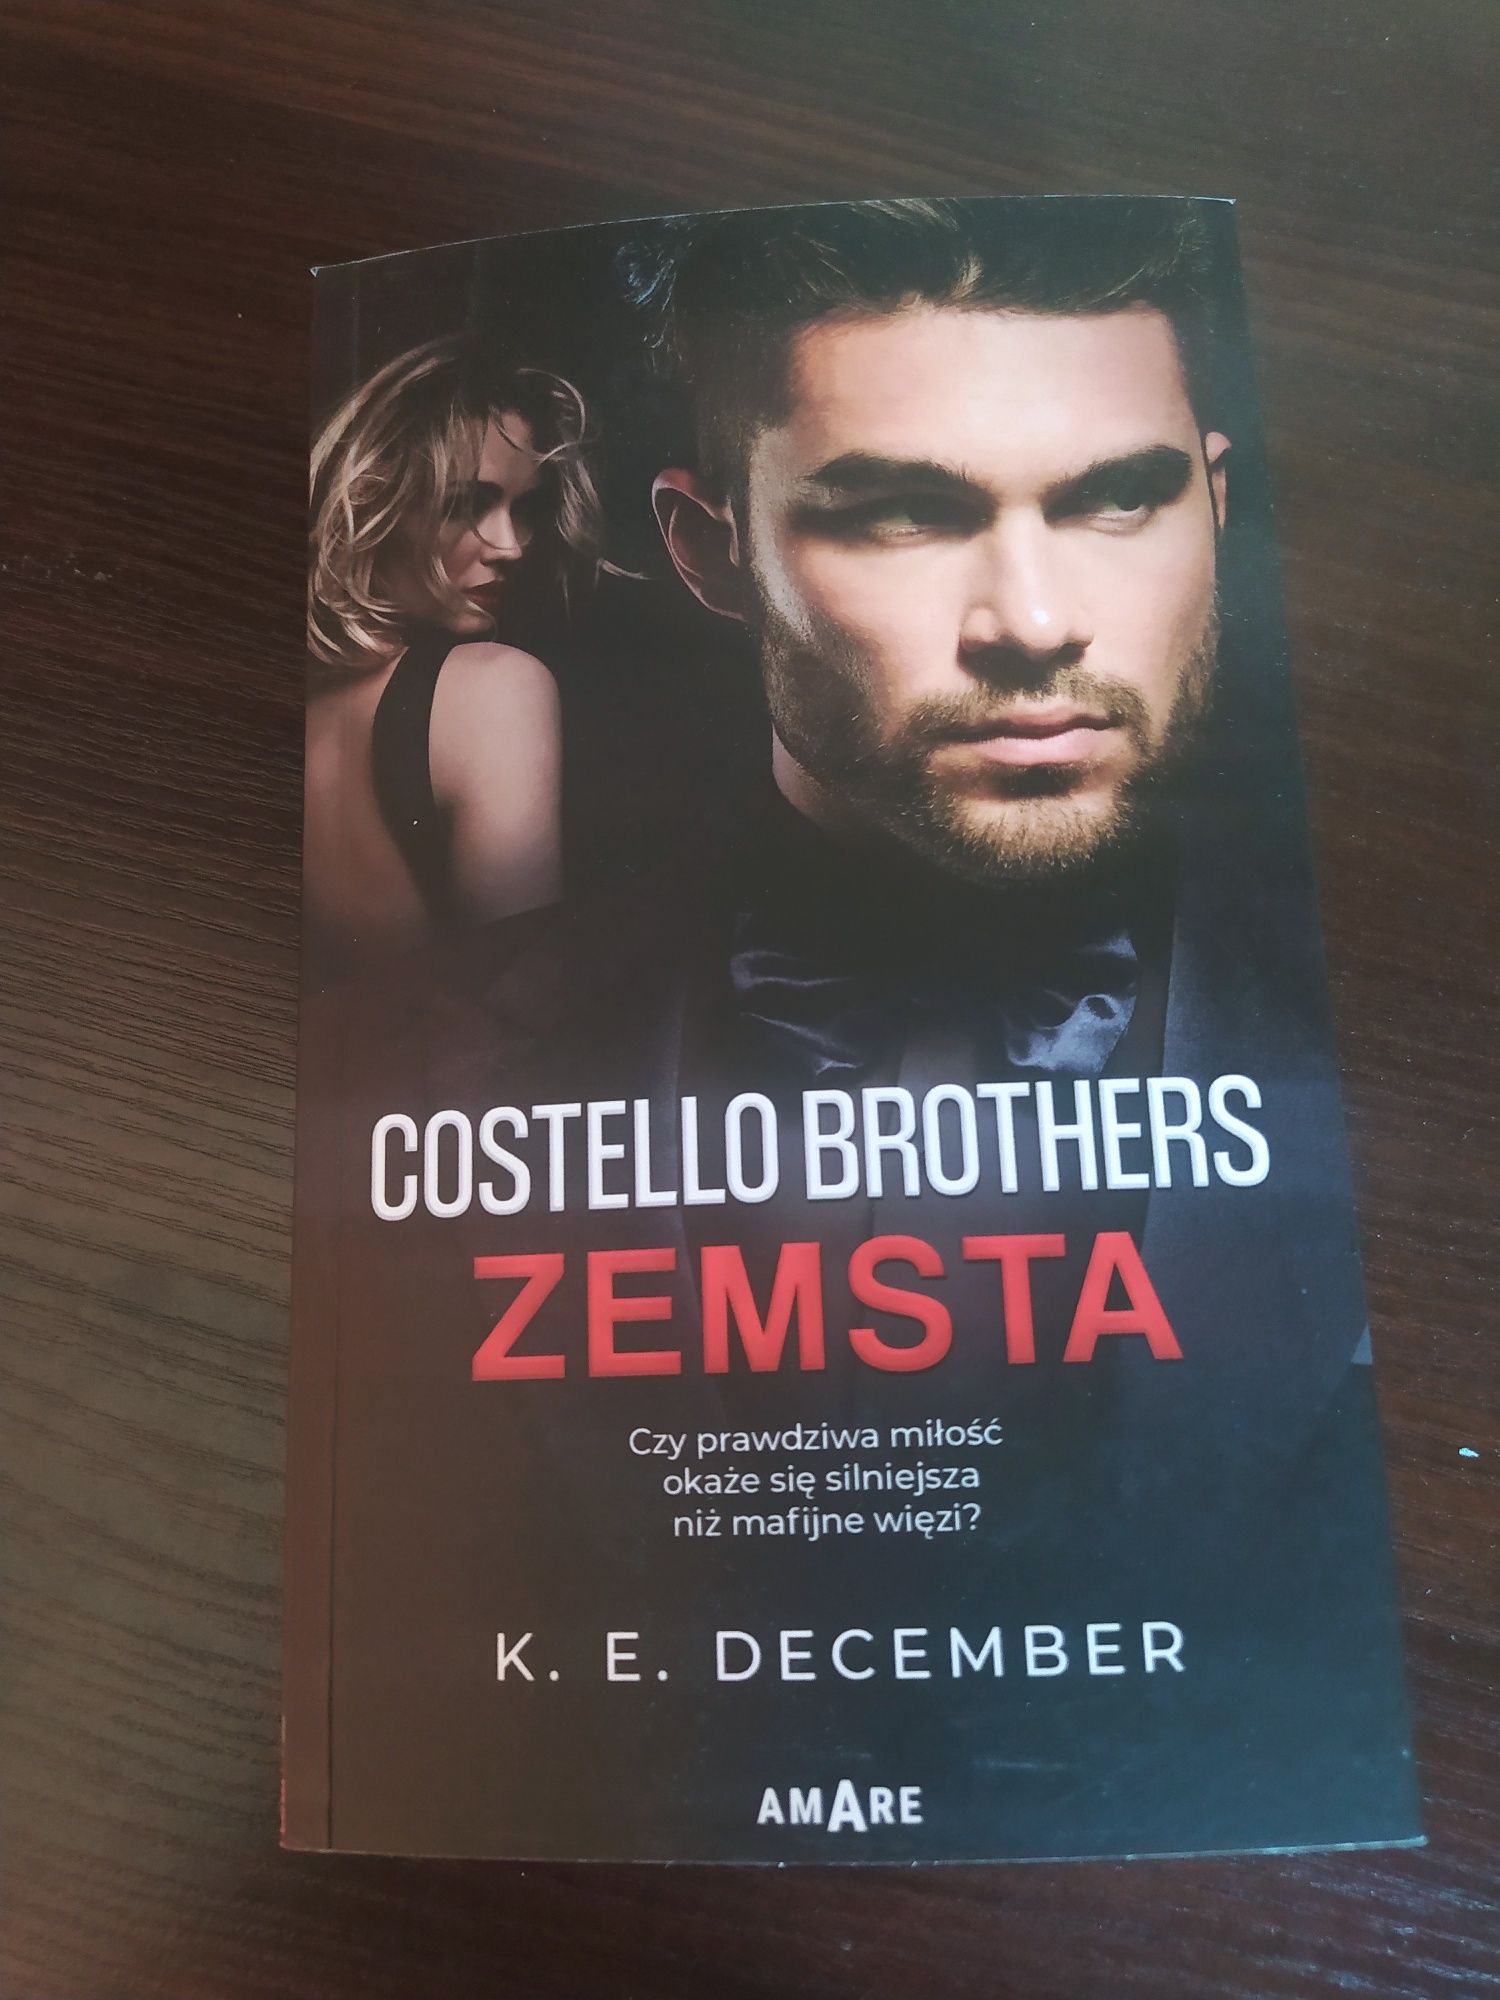 Costello Brothers Zemsta K. E. December